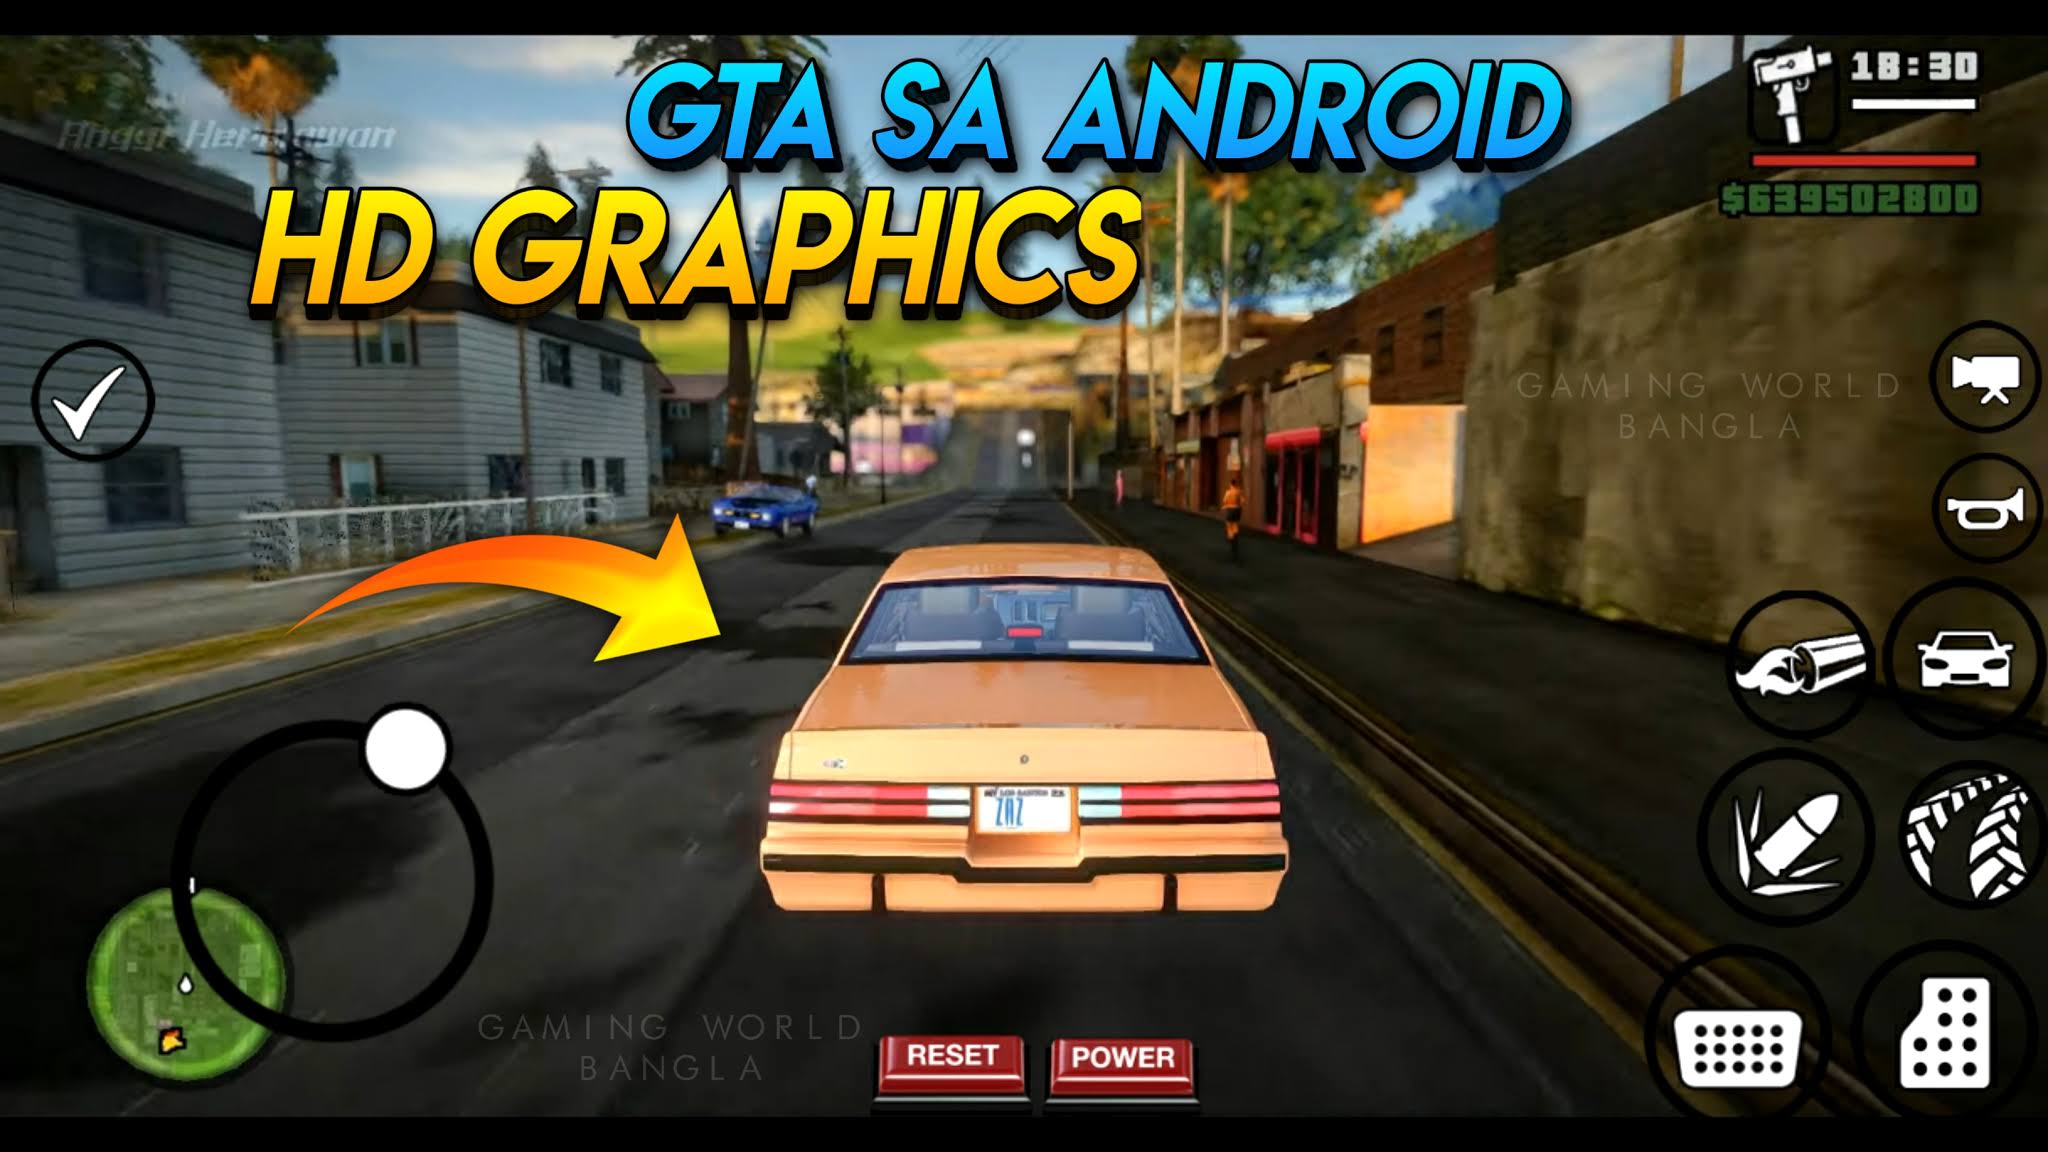 Hd Graphics Mod In Gta San Andreas Android Unlock Modpack For 1gb No Lag Support All Devices Gaming World Bangla Gta Sa Android Mods Modpack Gta Sa Lite